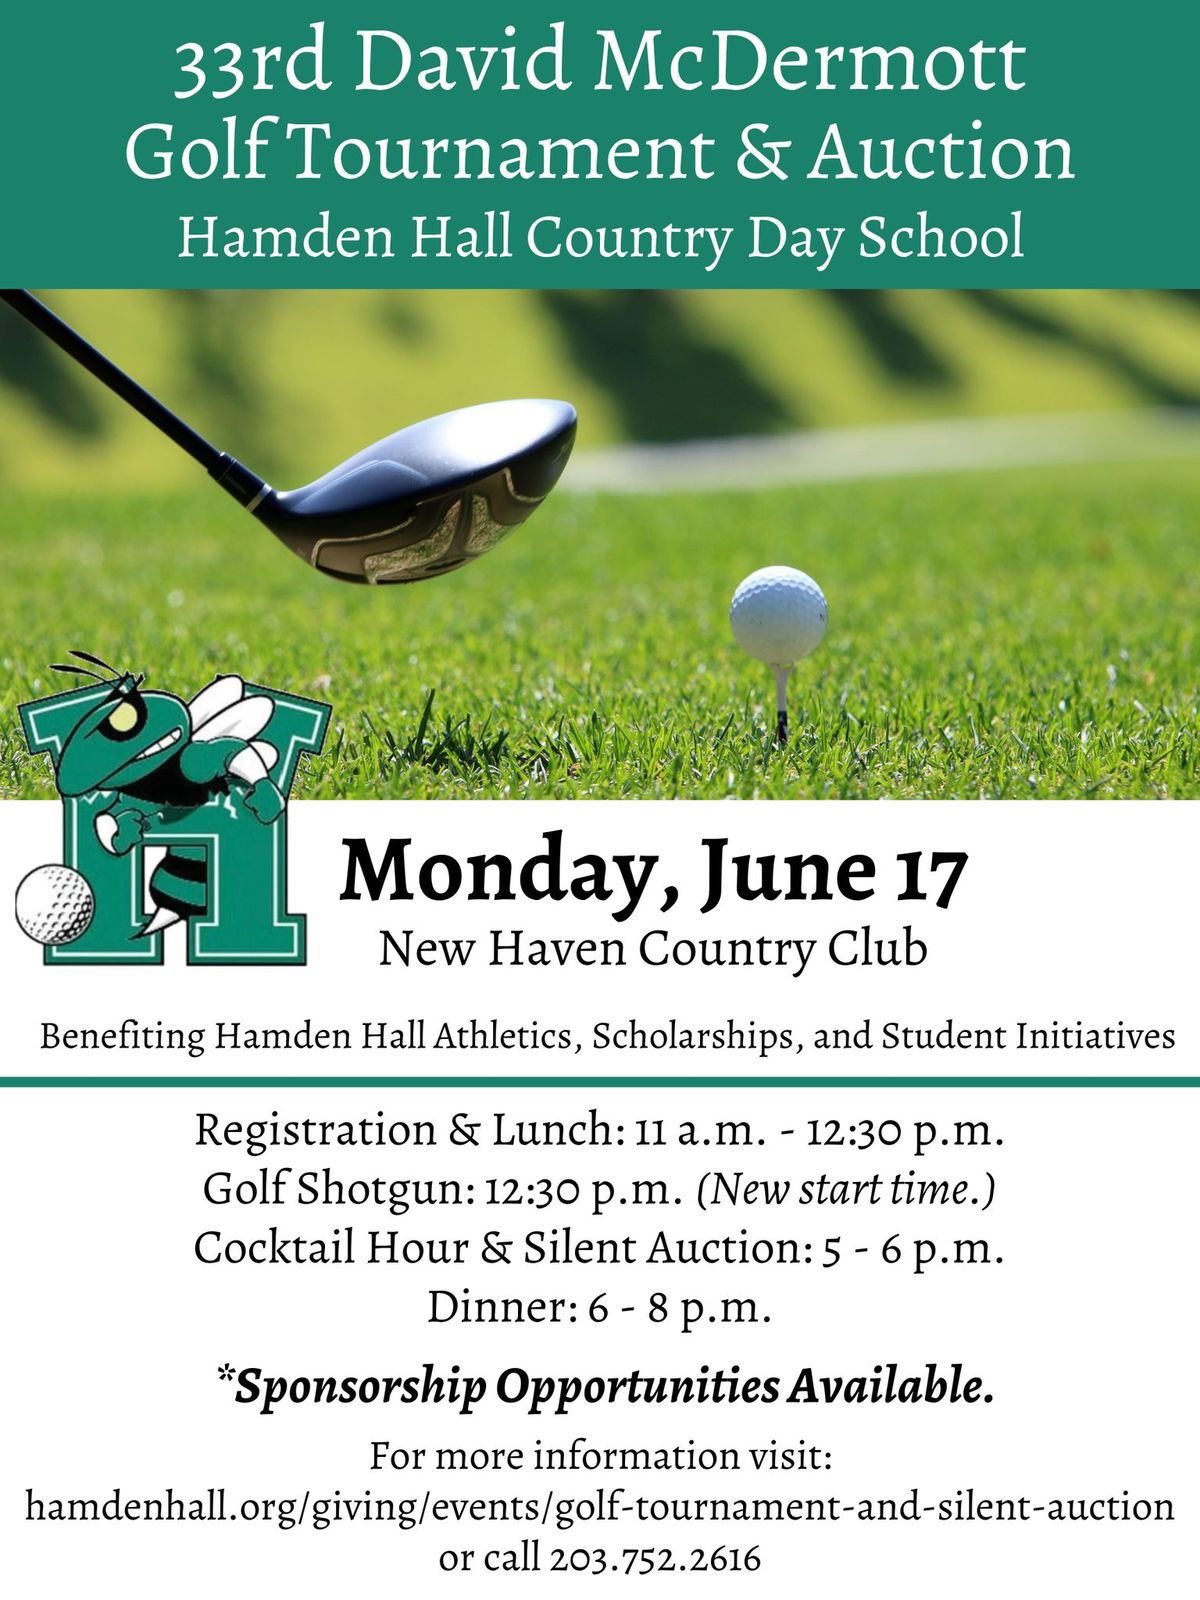 Hamden Hall's 33rd David McDermott Golf Tournament & Auction  